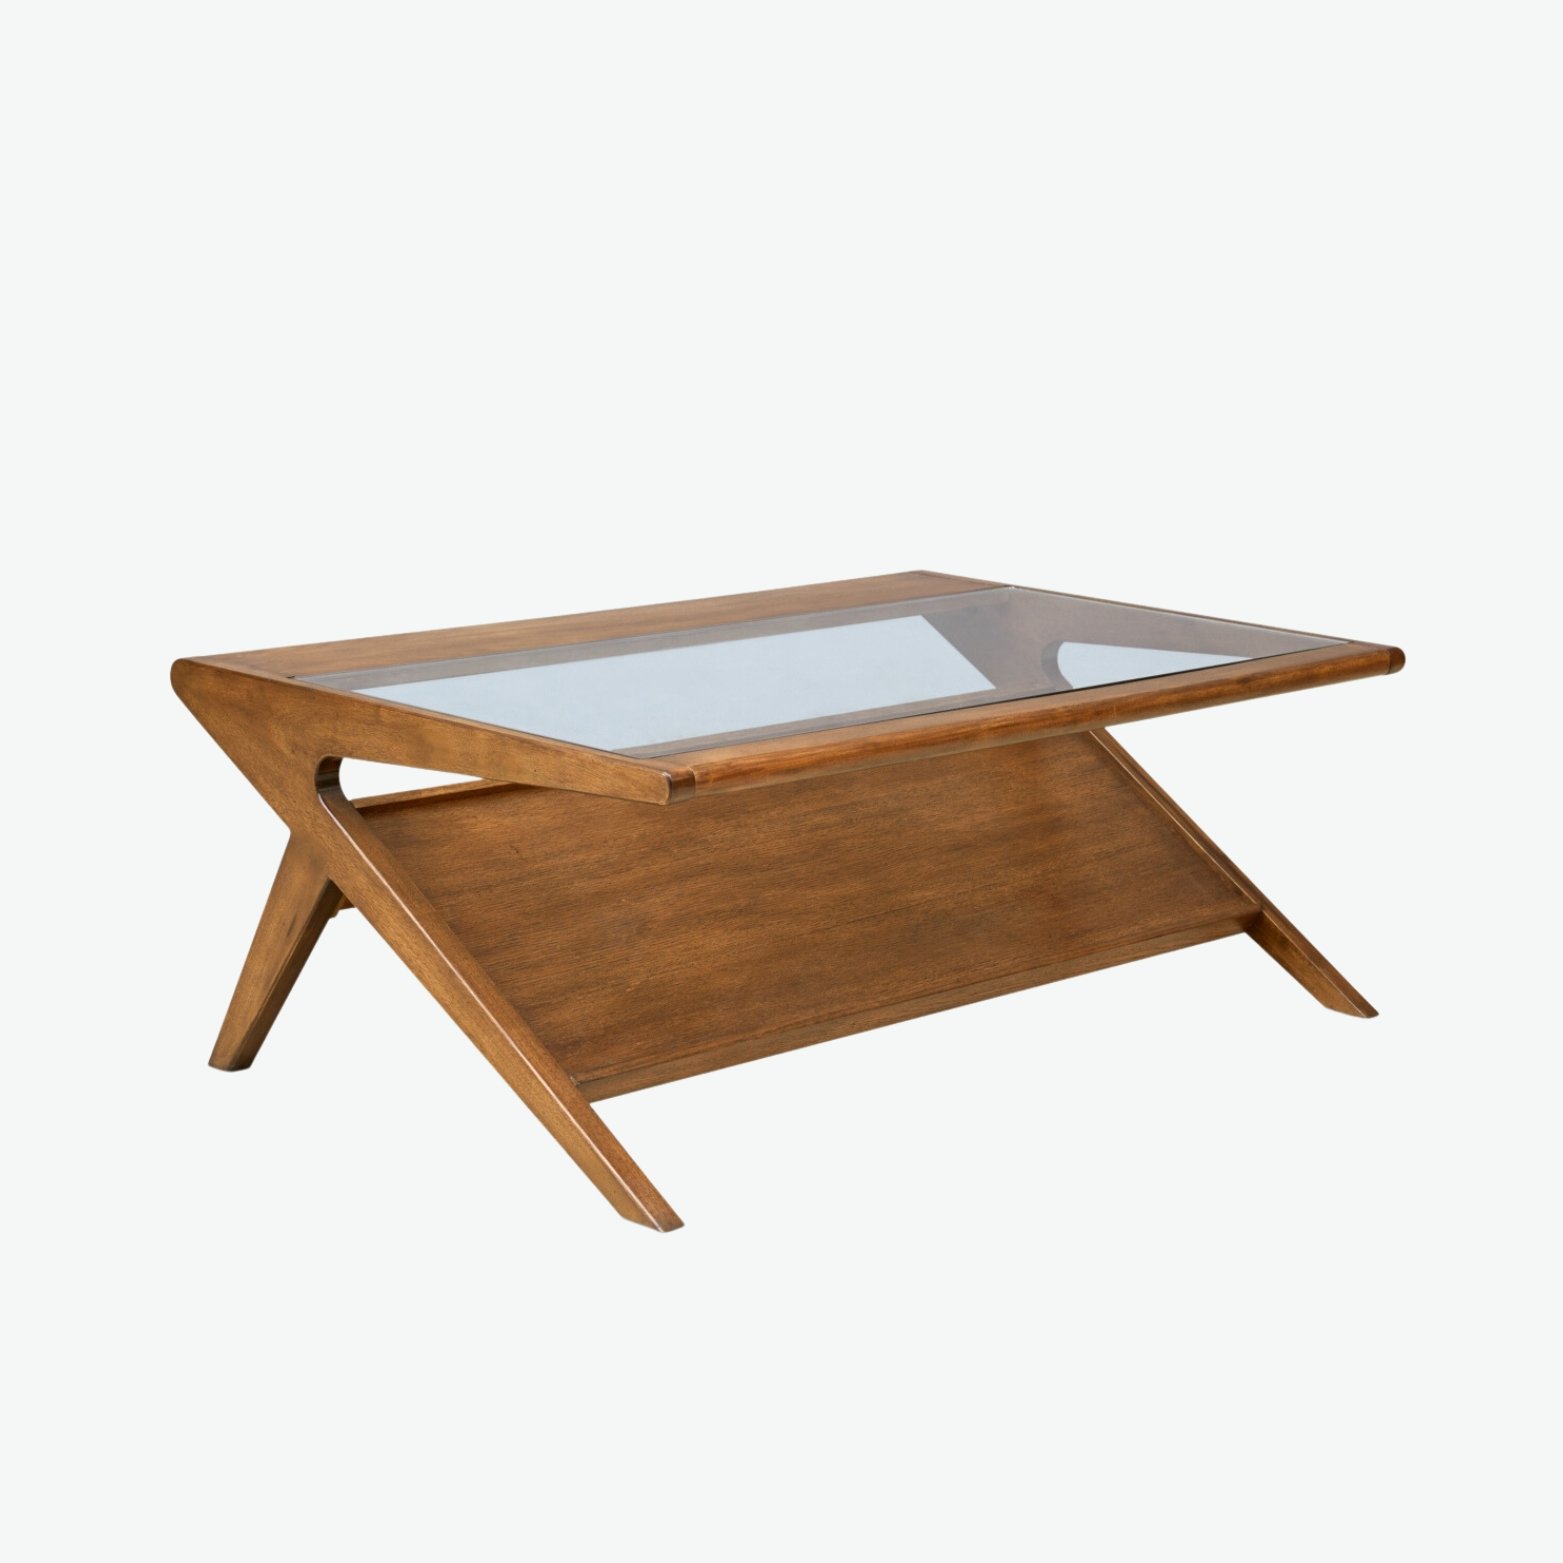 Angled Wood Coffee Table with Glass Top.jpg